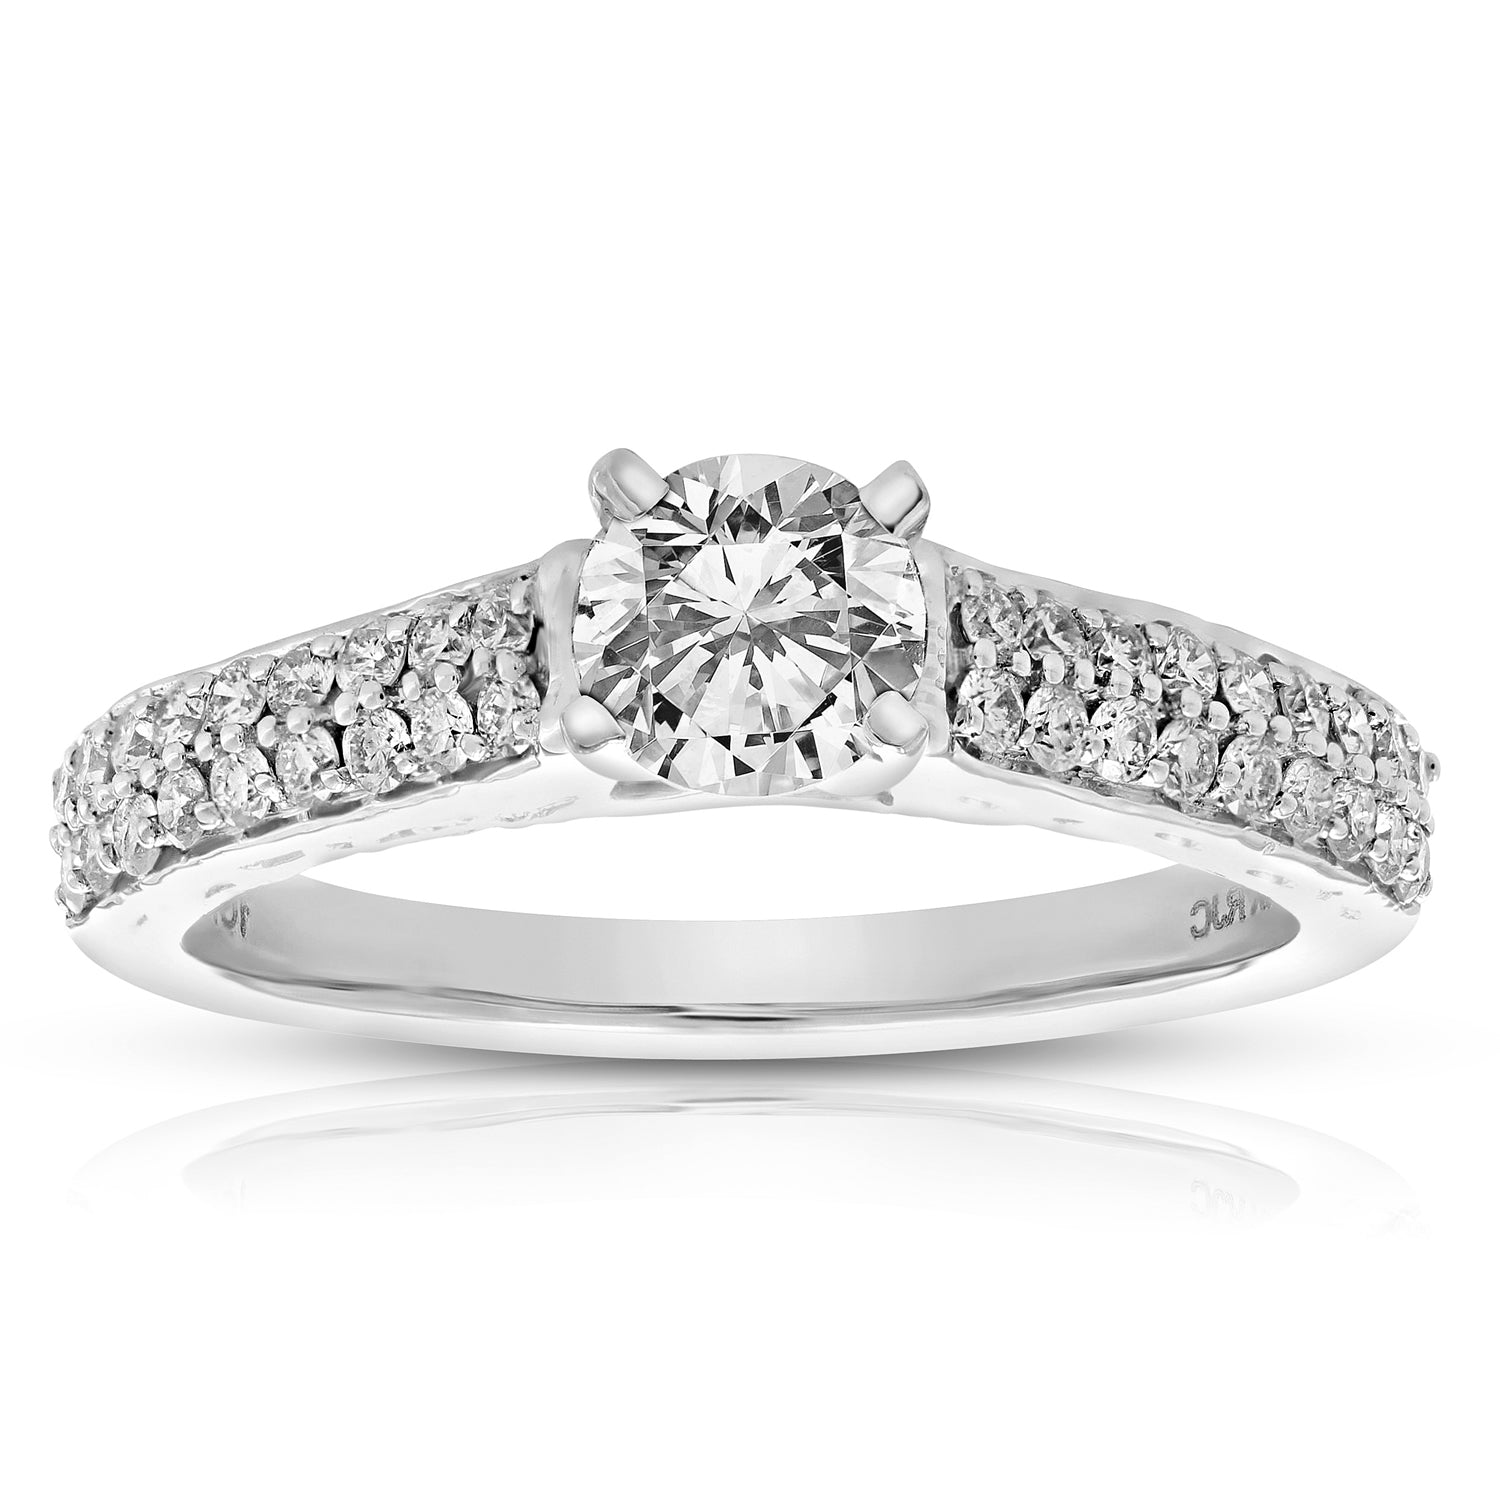 1 cttw Round Diamond Engagement Ring 14K White Gold Size 7